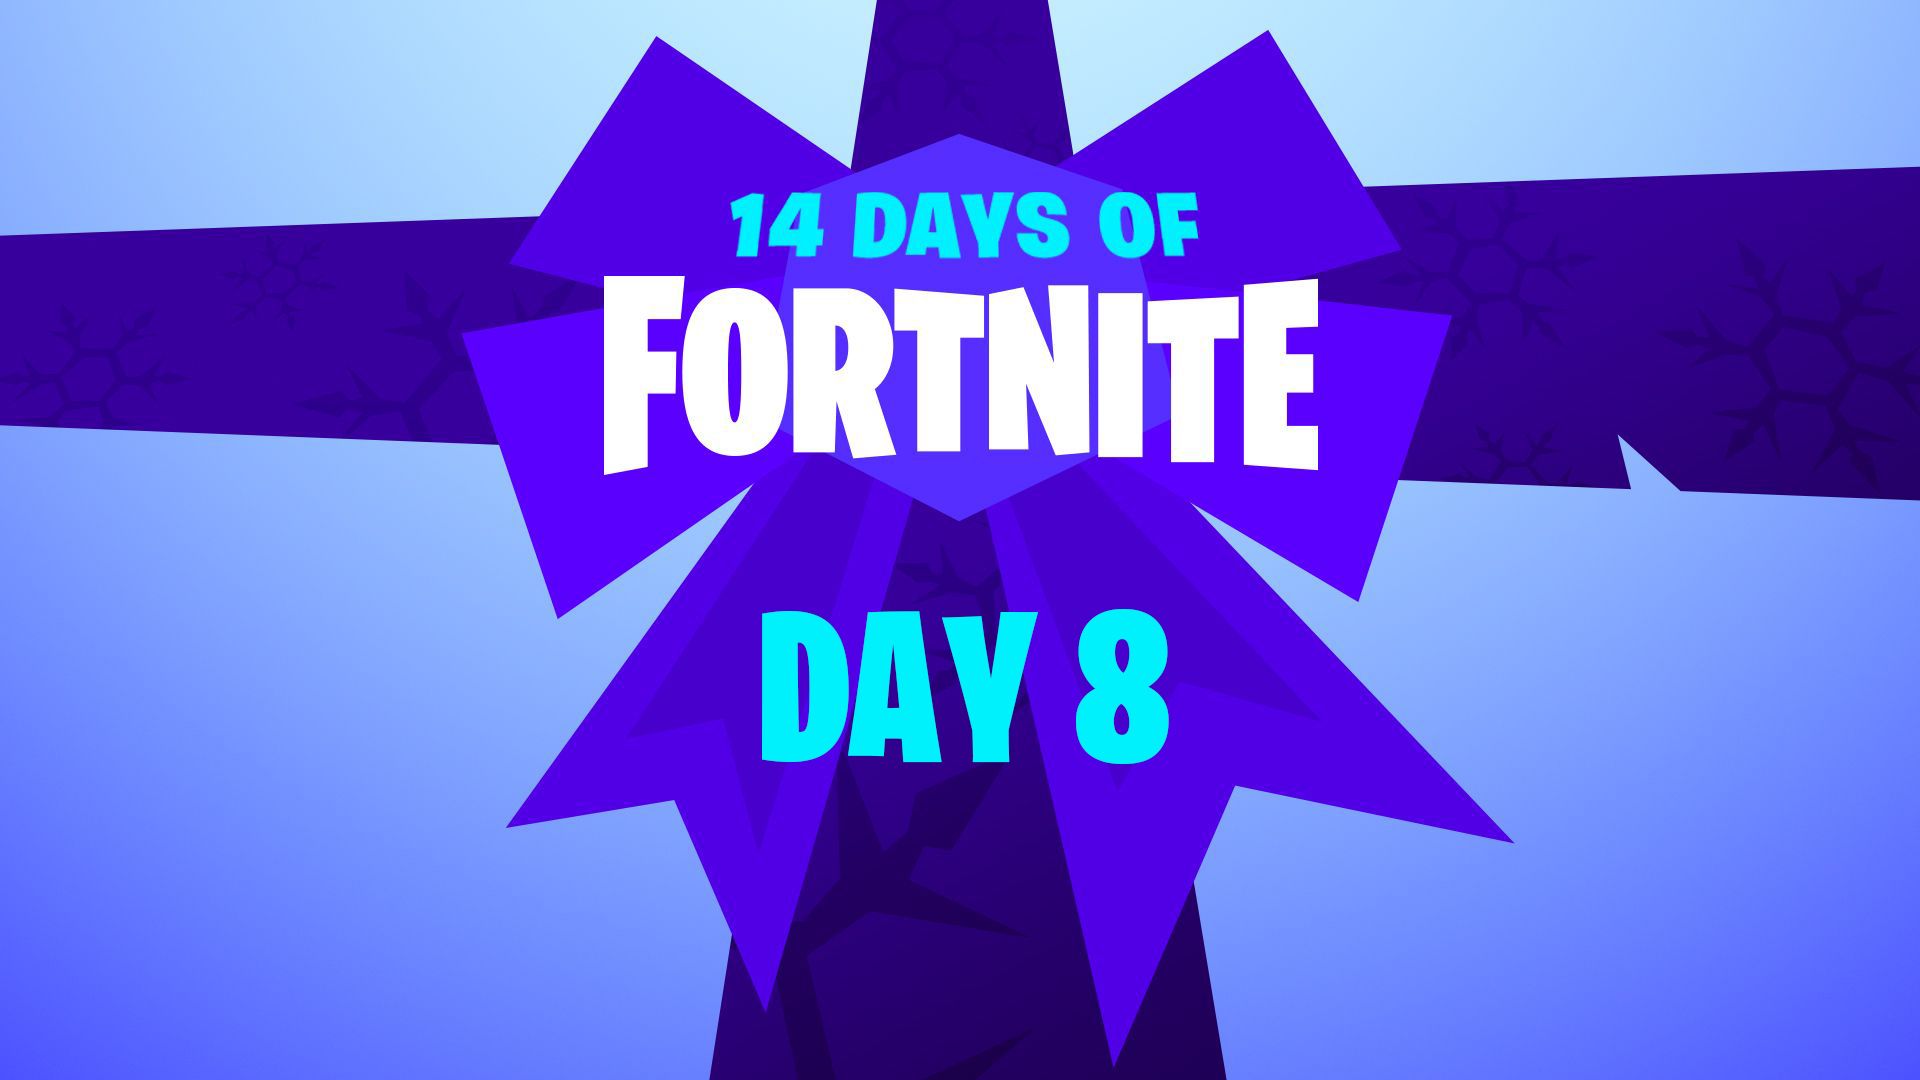 14 Days of Fortnite - Day 8 challenge & reward